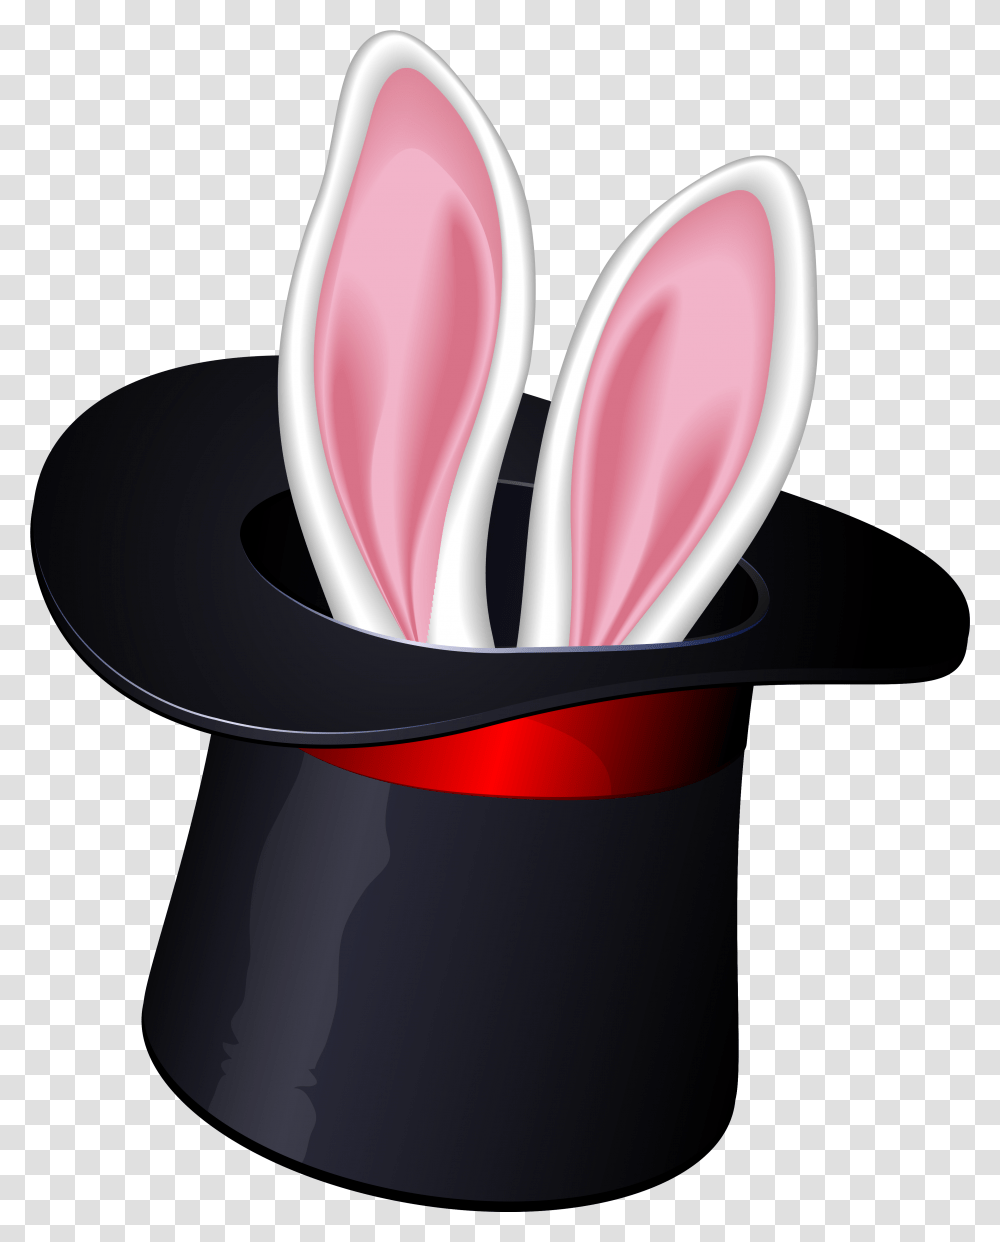 Cool Bunny Magic Hat Clipart Magic Top Hat Clip Art, Cutlery, Spoon, Wooden Spoon Transparent Png